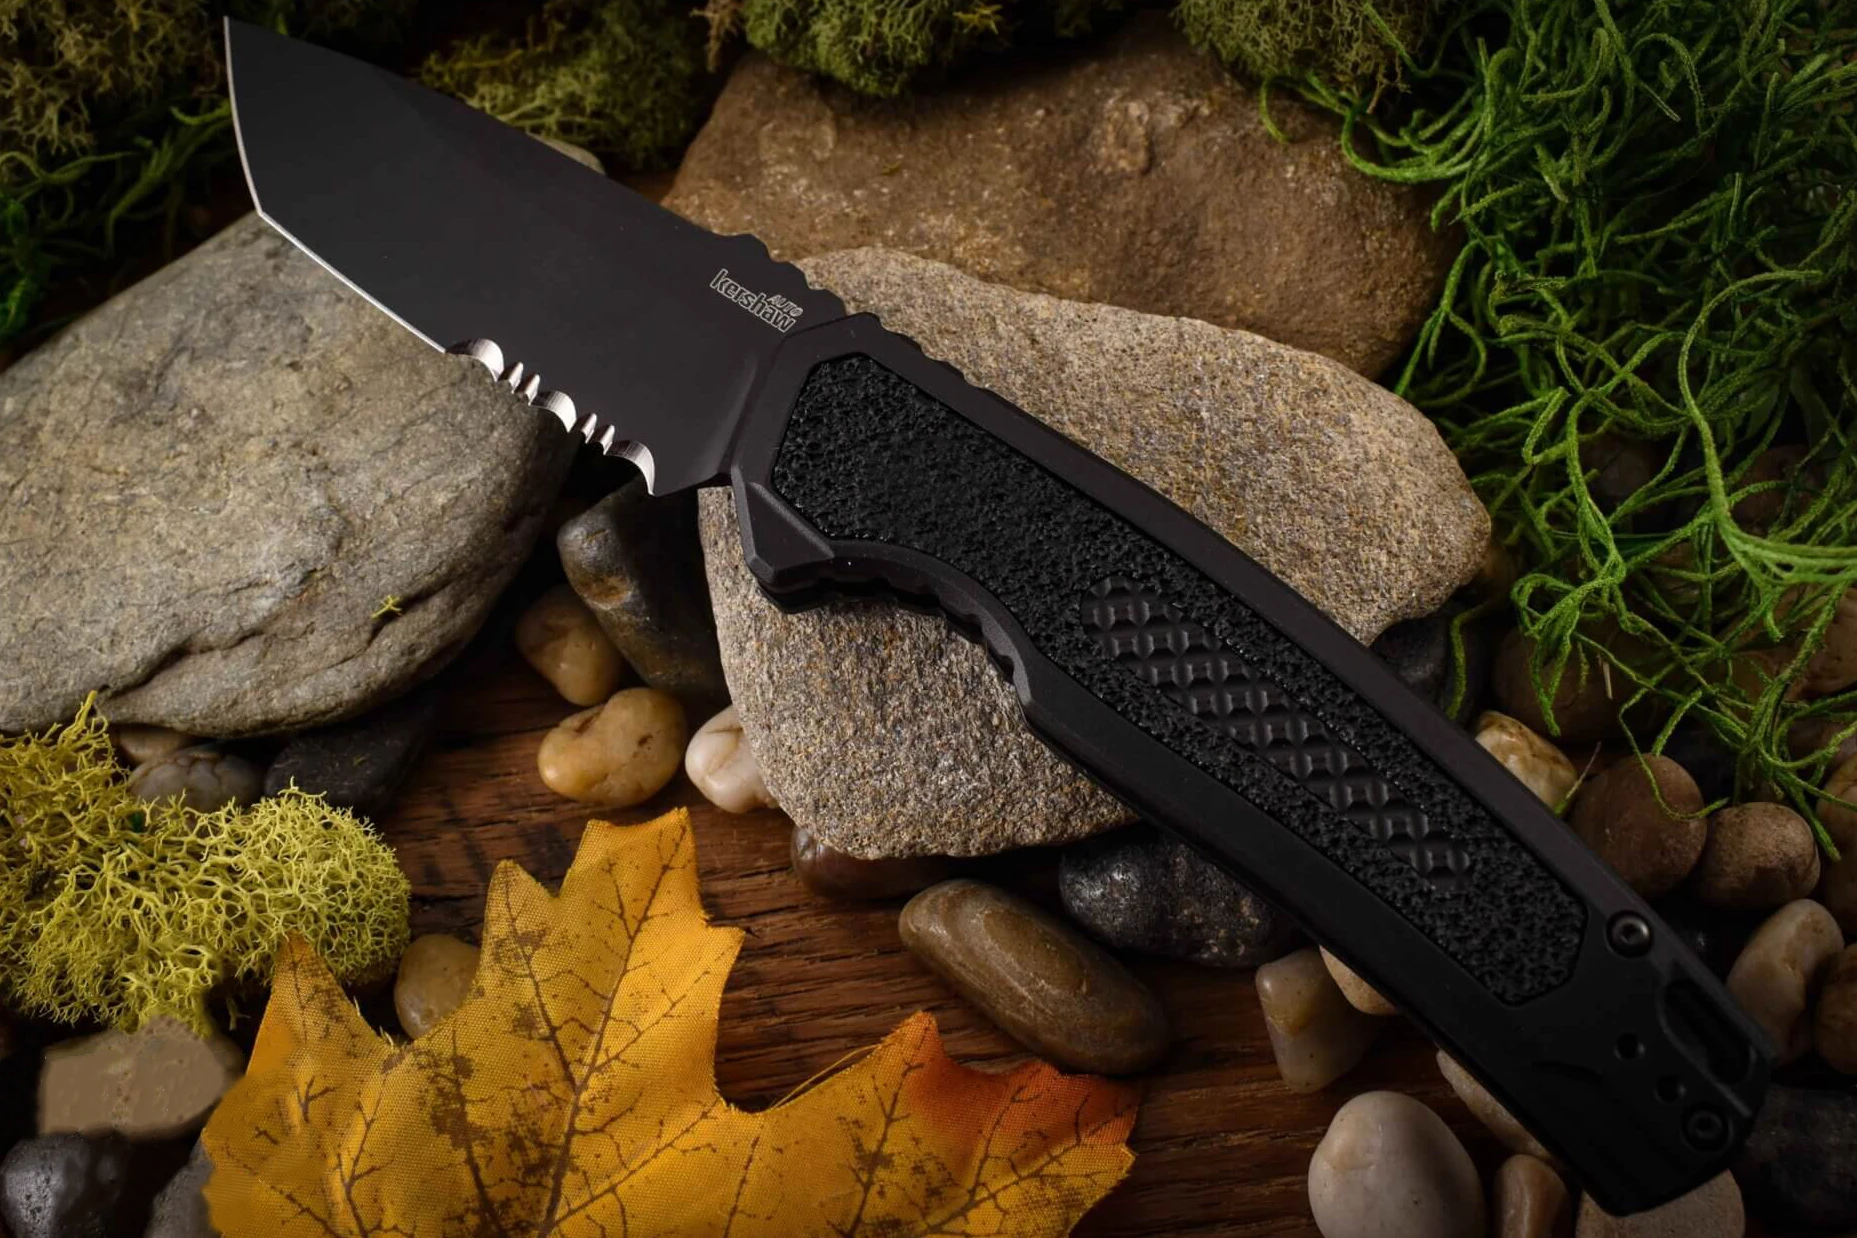 

Kershaw 7105BLK Launch 16 Knife 3.34" Black Blade Aluminum Alloy Handle Edc Survival Tactical Outdoor Folding Pocket Knives Tool